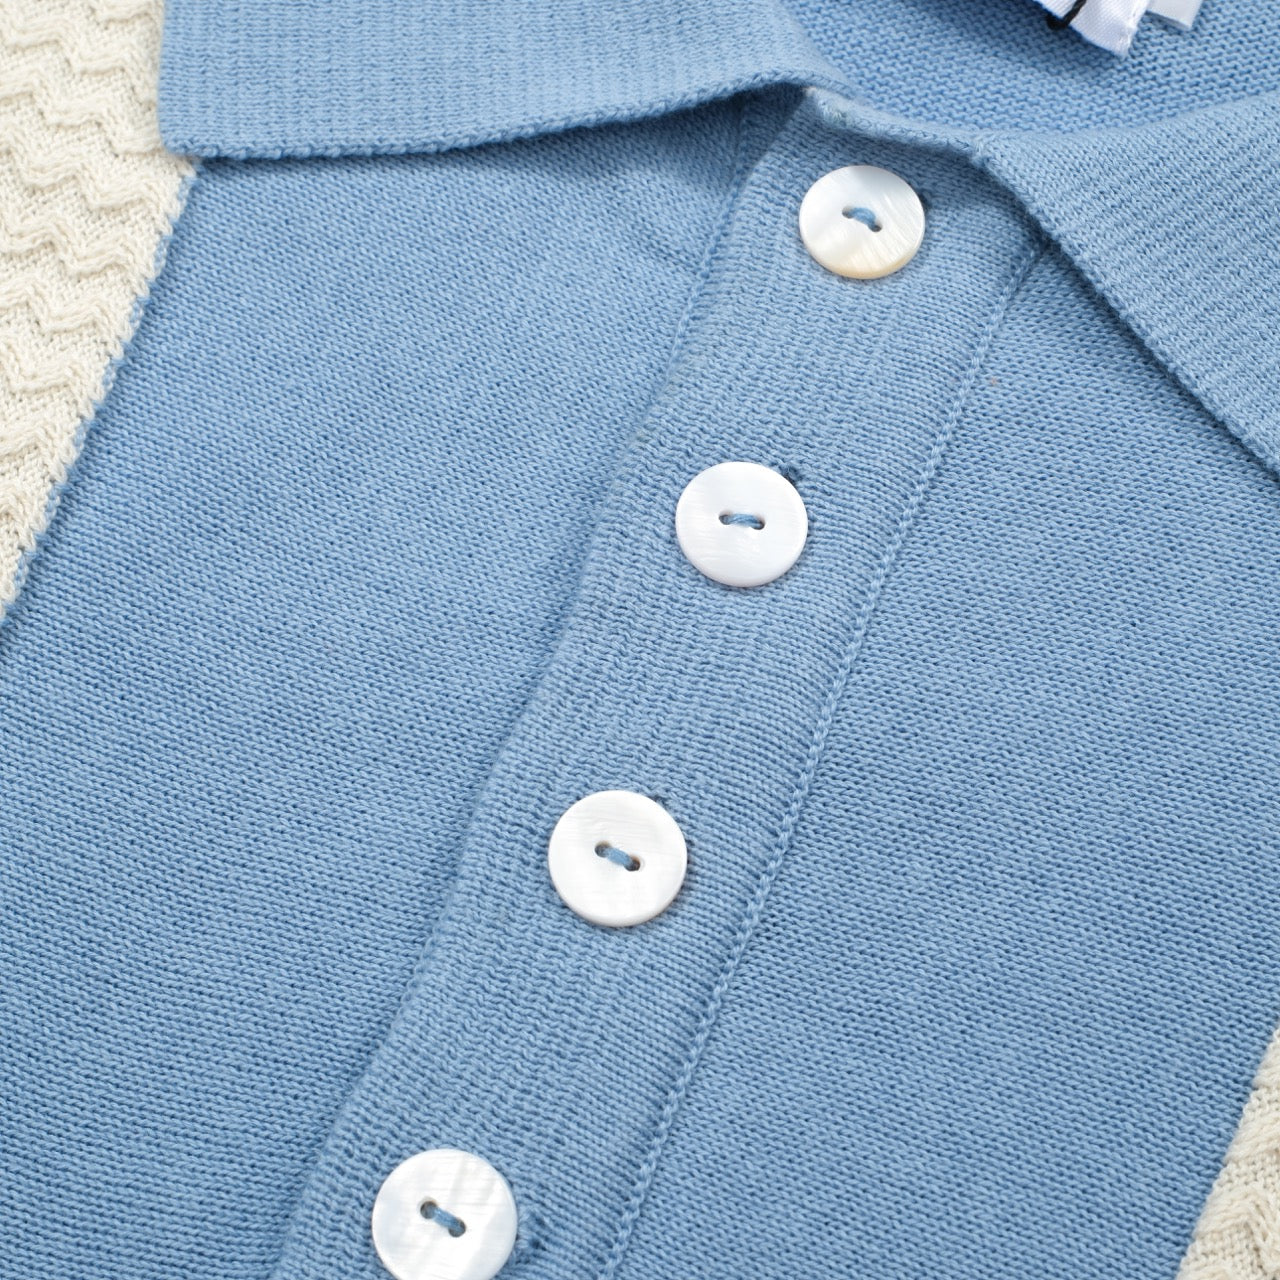 OXKNIT Men Vintage Clothing 1960s Mod Style Casual Stripe Blue Knit Retro Polo